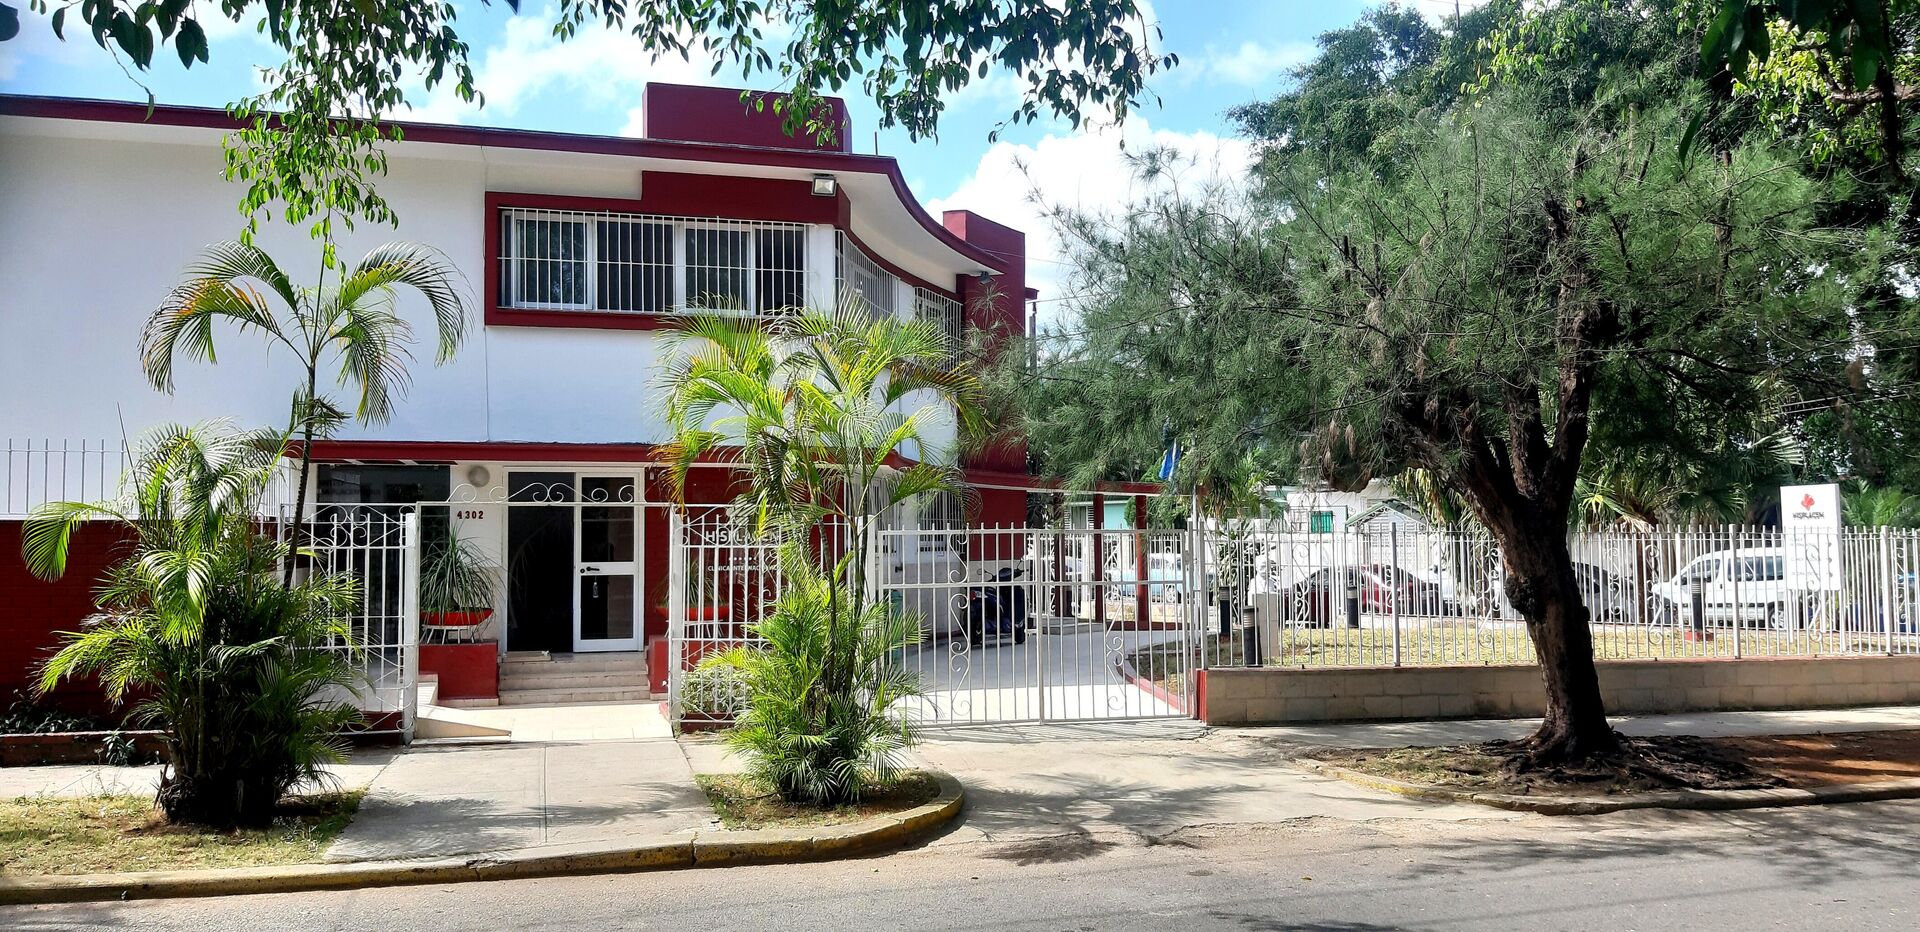 Centro Histoterapia Placentaria de Cuba - Sputnik Mundo, 1920, 27.04.2021